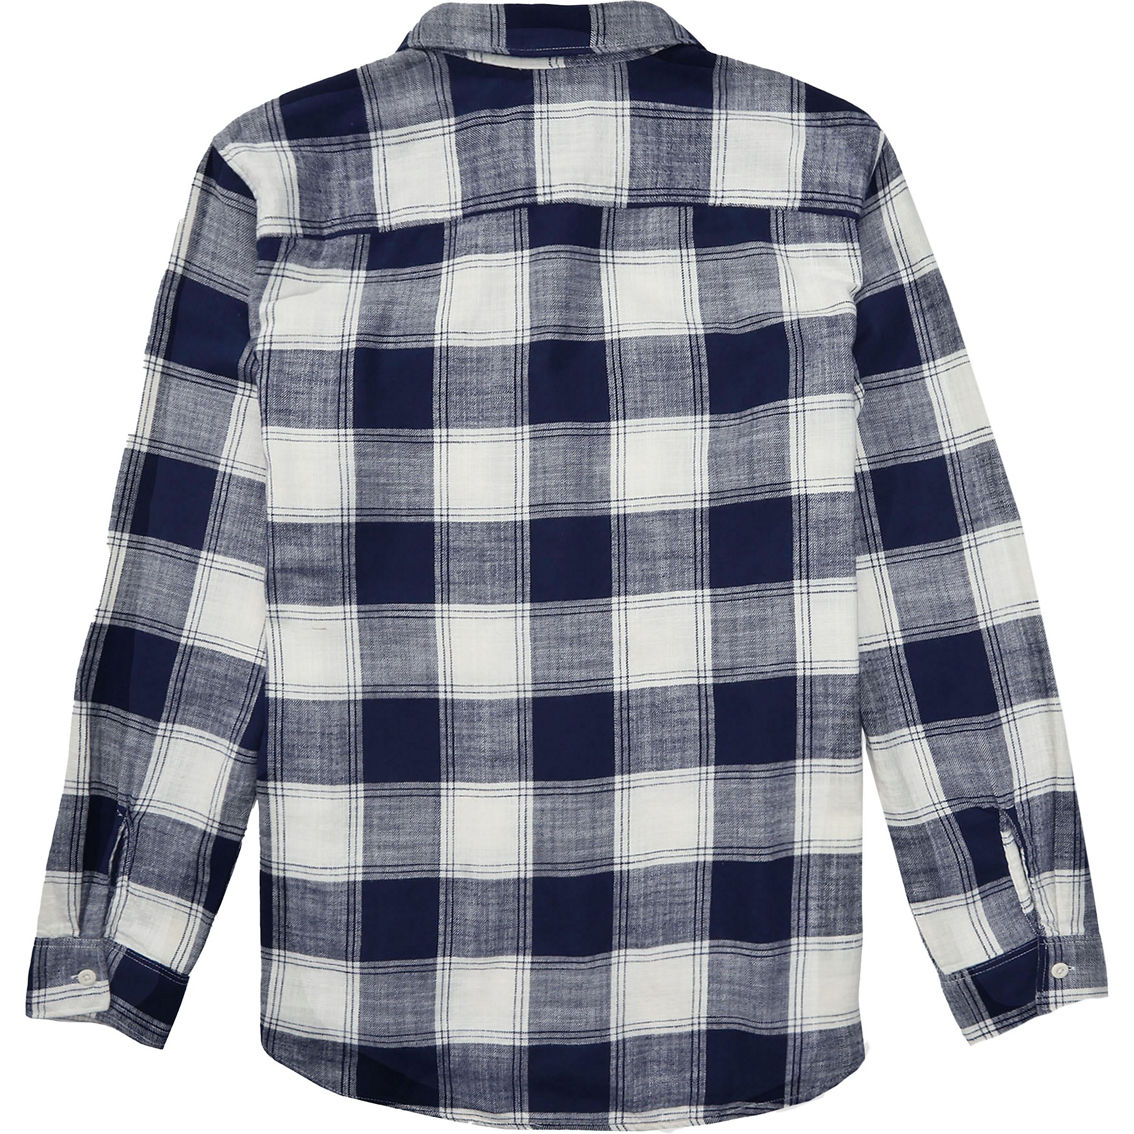 American Eagle Super Soft Flannel Shirt | Shirts | Clothing ...